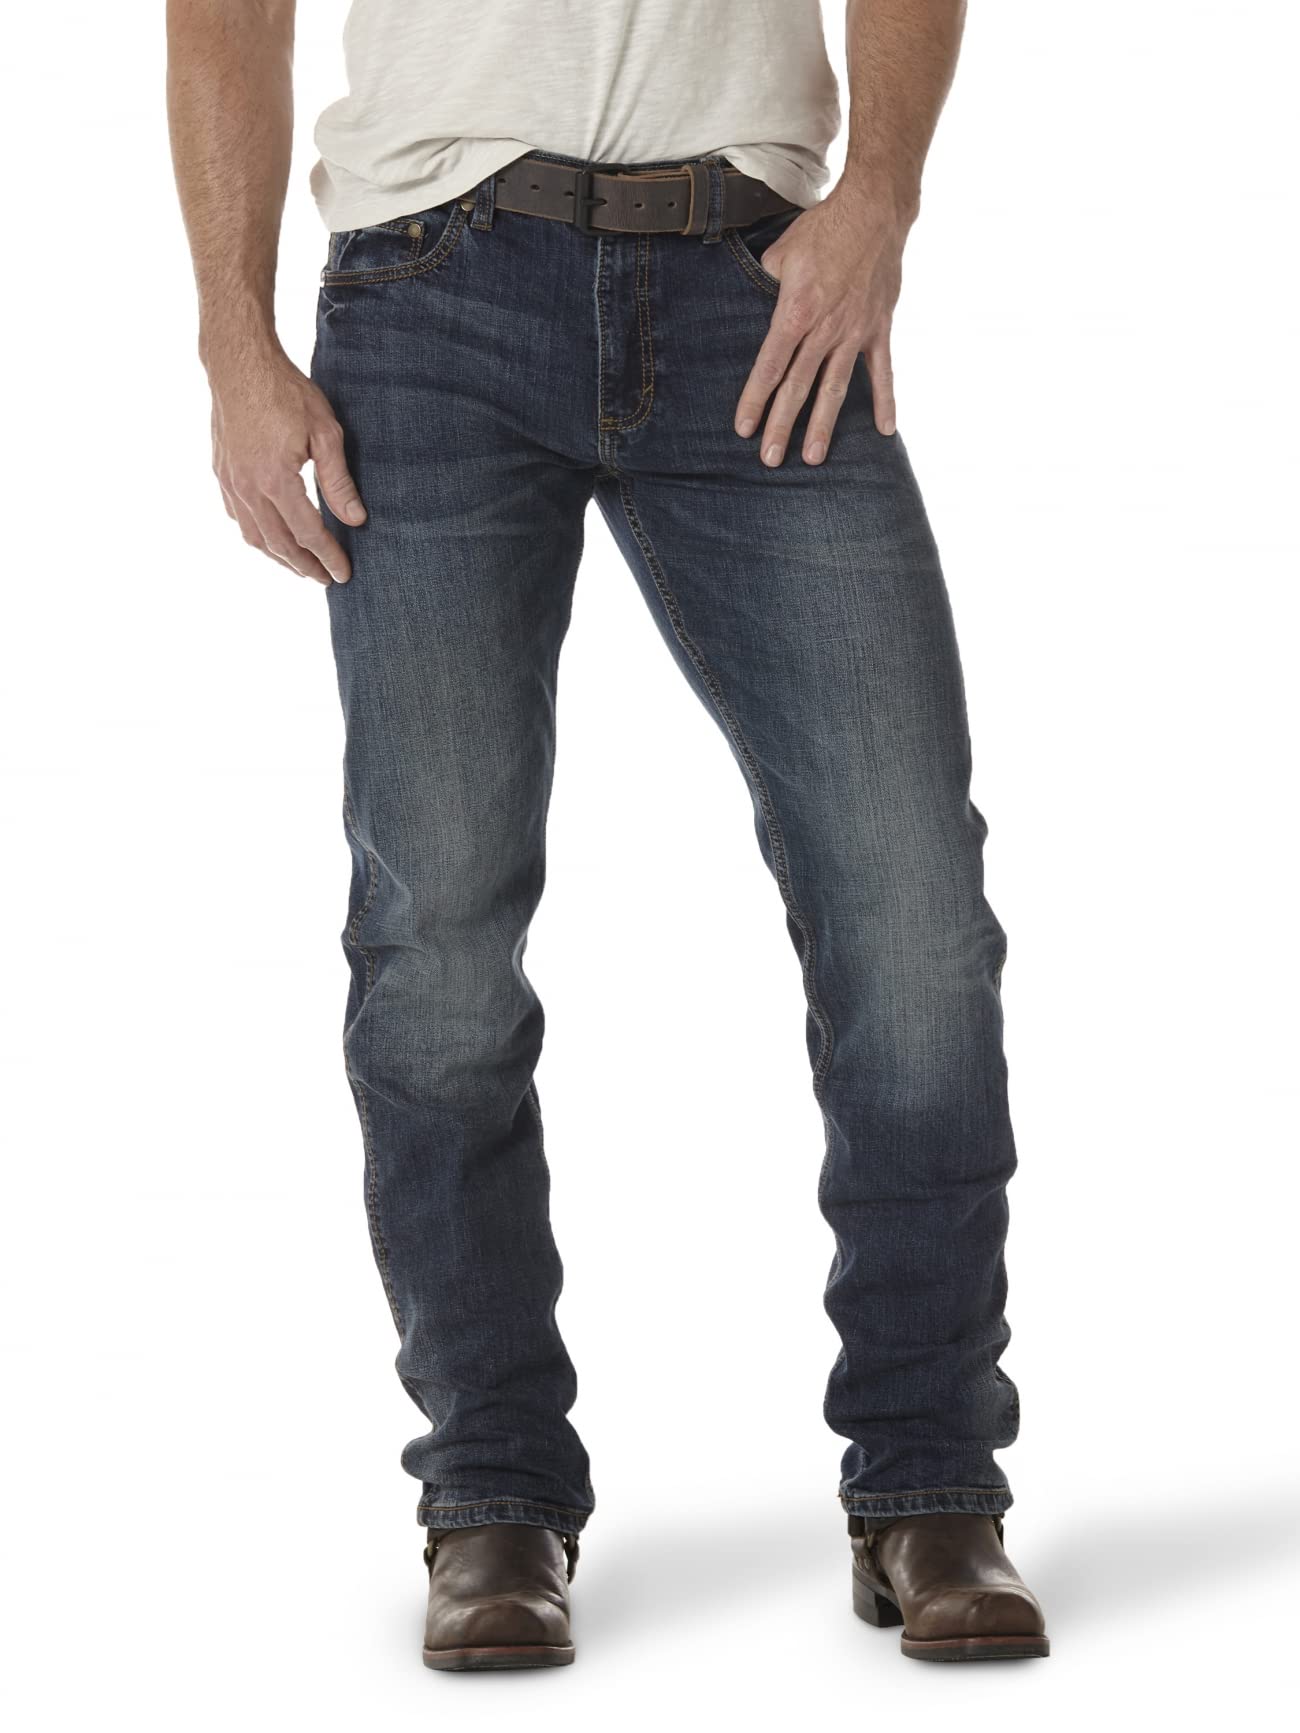 Wrangler Men's Retro Slim Fit Straight Leg Jean, Bozeman, 34W x 30L